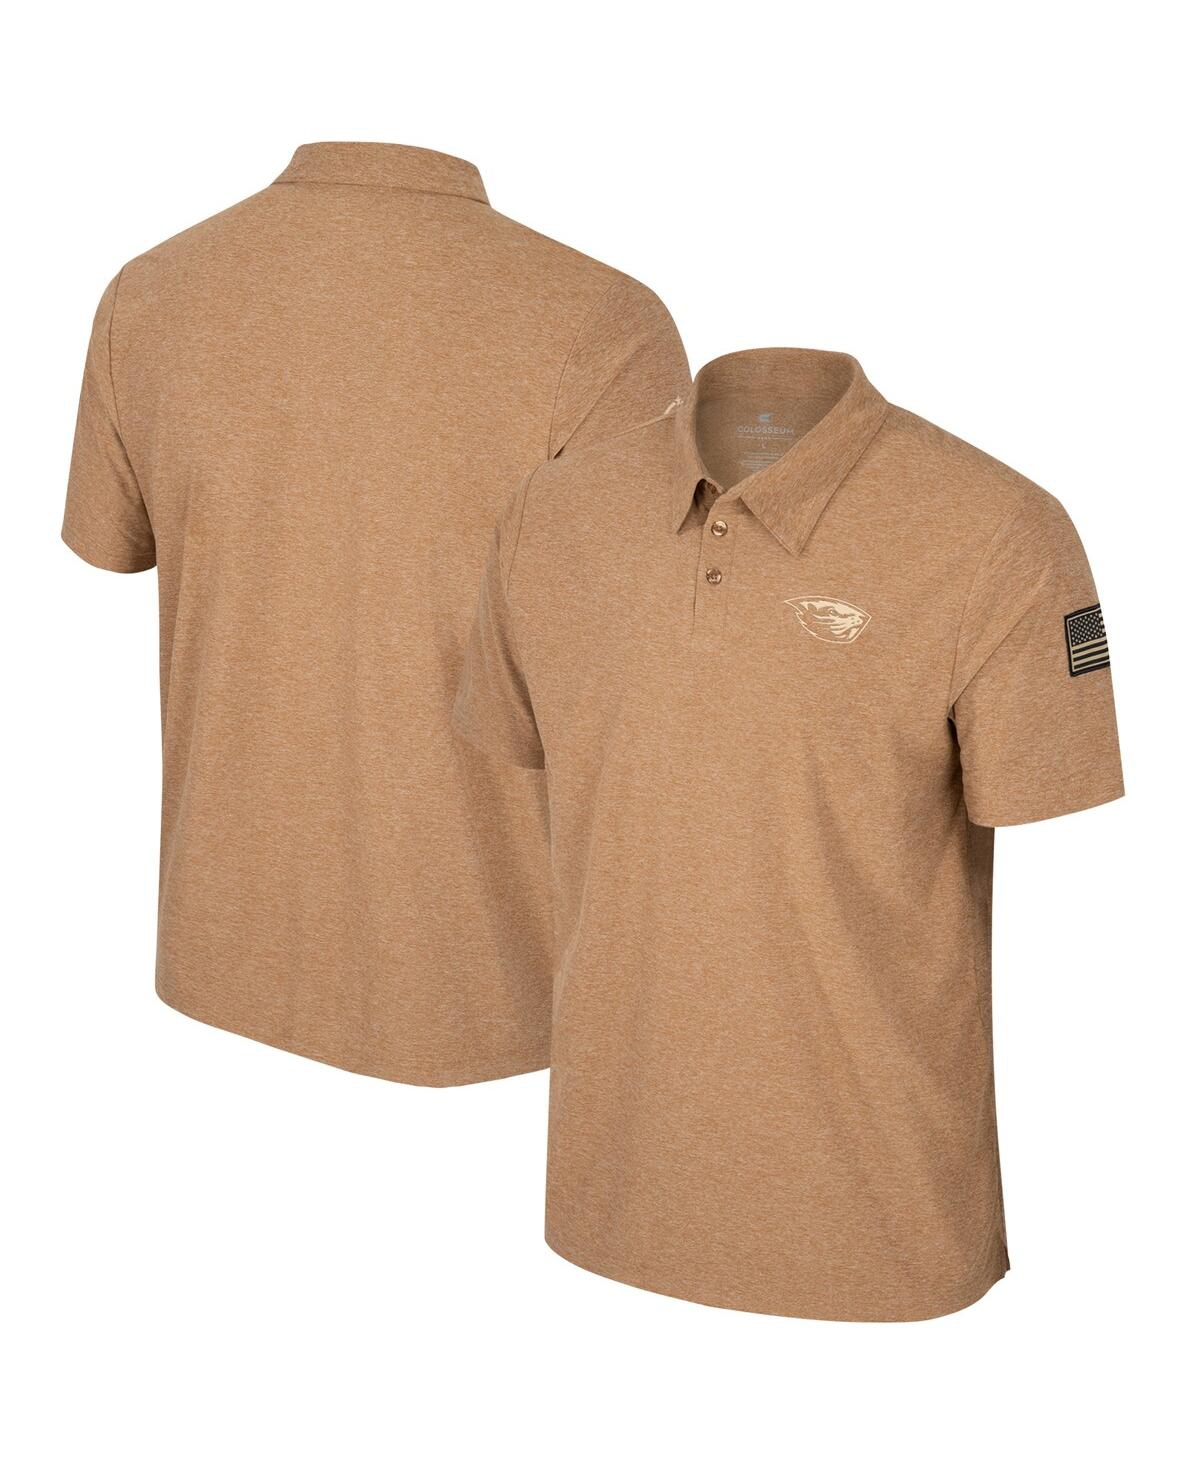 Men's Colosseum Khaki Oregon State Beavers Oht Military-Inspired Appreciation Cloud Jersey Desert Polo Shirt - Khaki